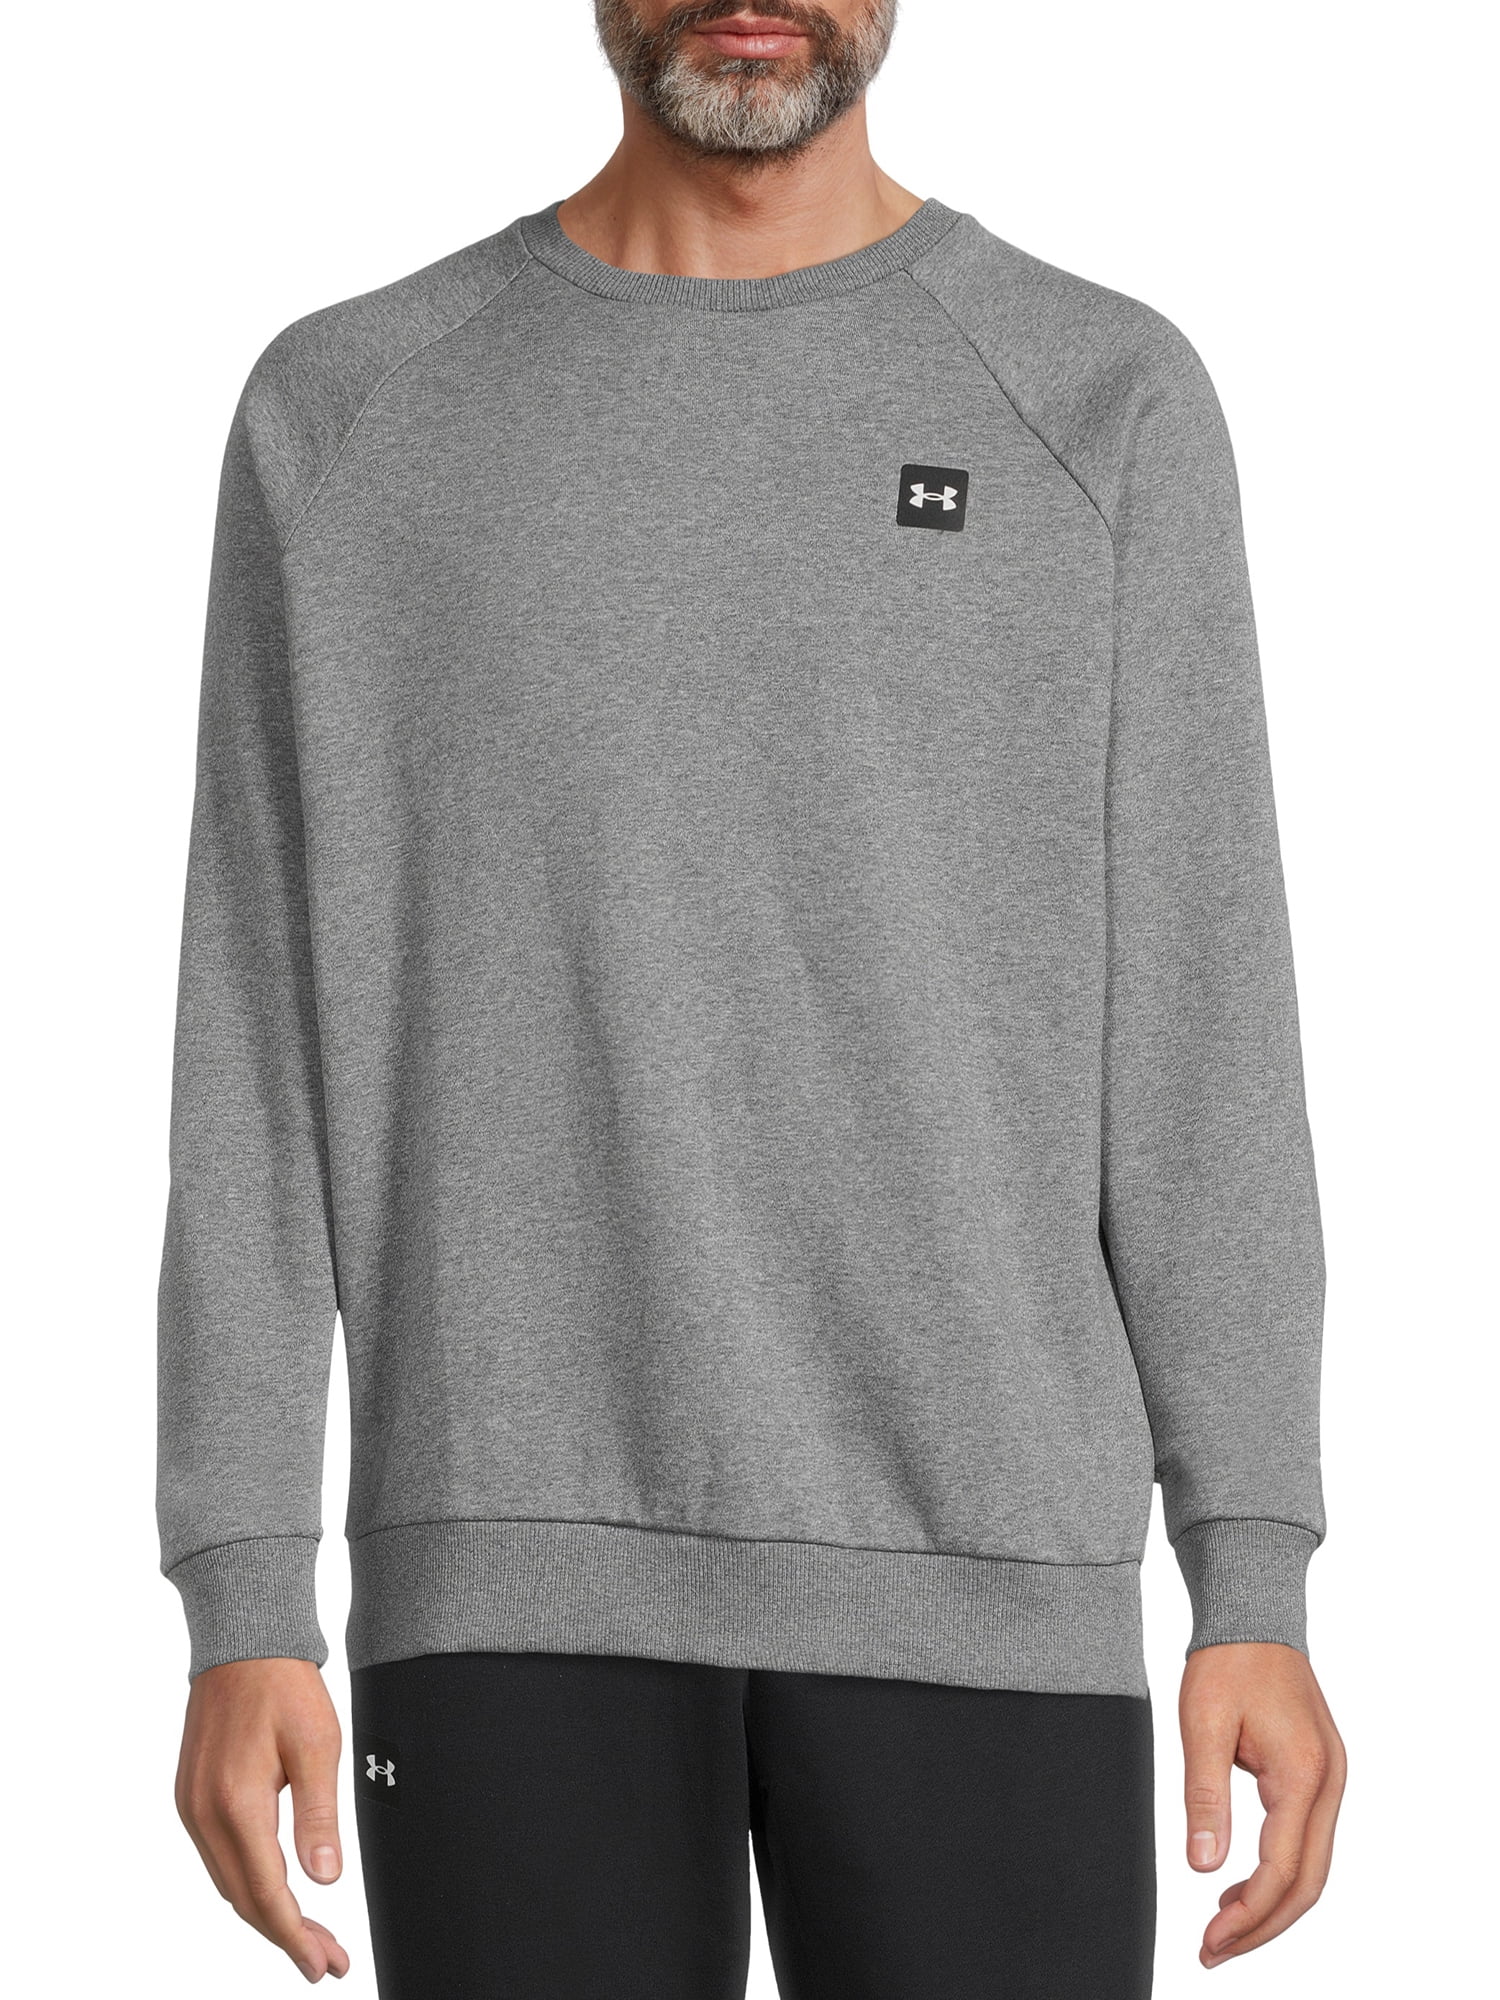 Under Armour Men's UA Rival Fleece Logo Crewneck Sweatshirt, Sizes S-2XL